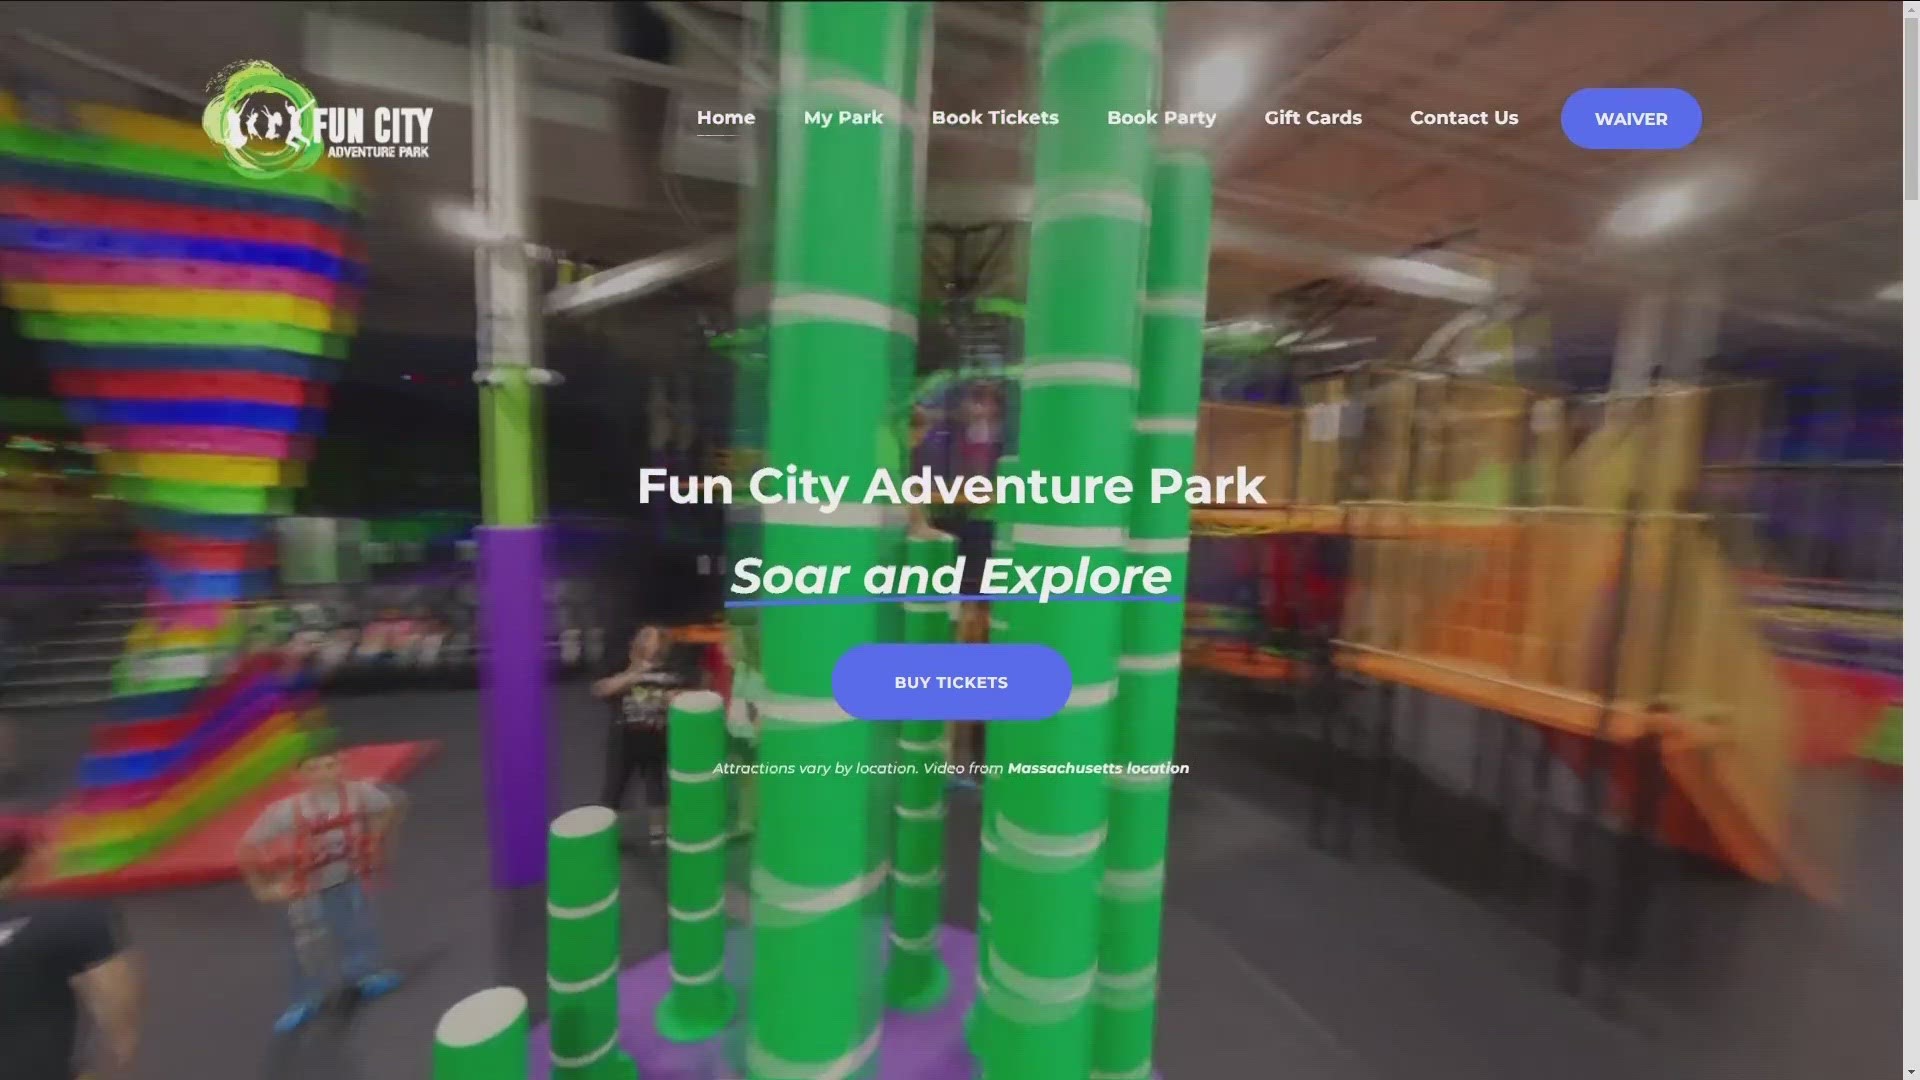 Fun City Adventure Park opening tomorrow at Union Consumer Square